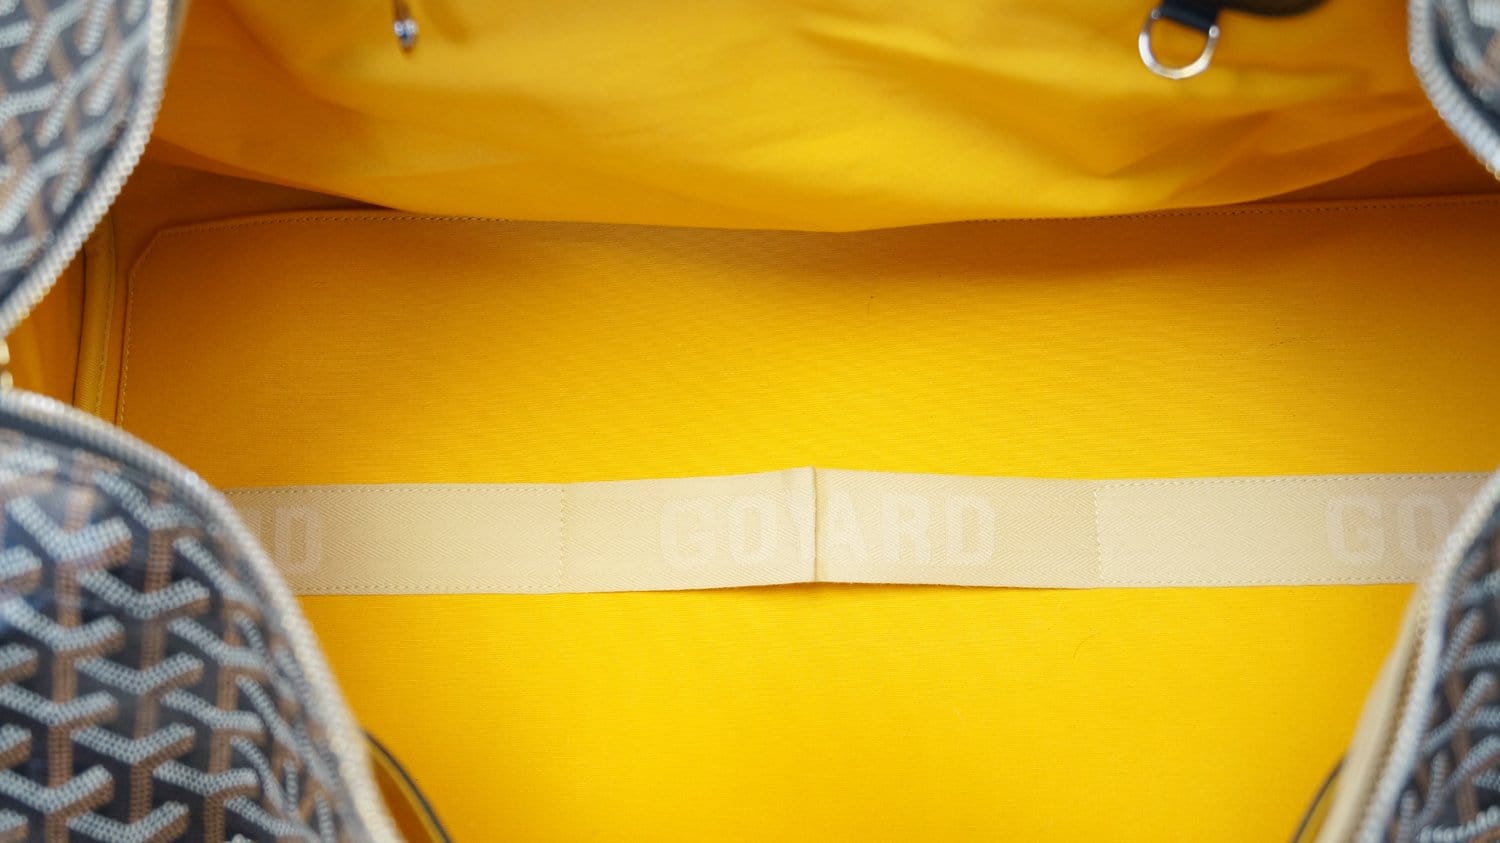 yellow goyard duffle bag